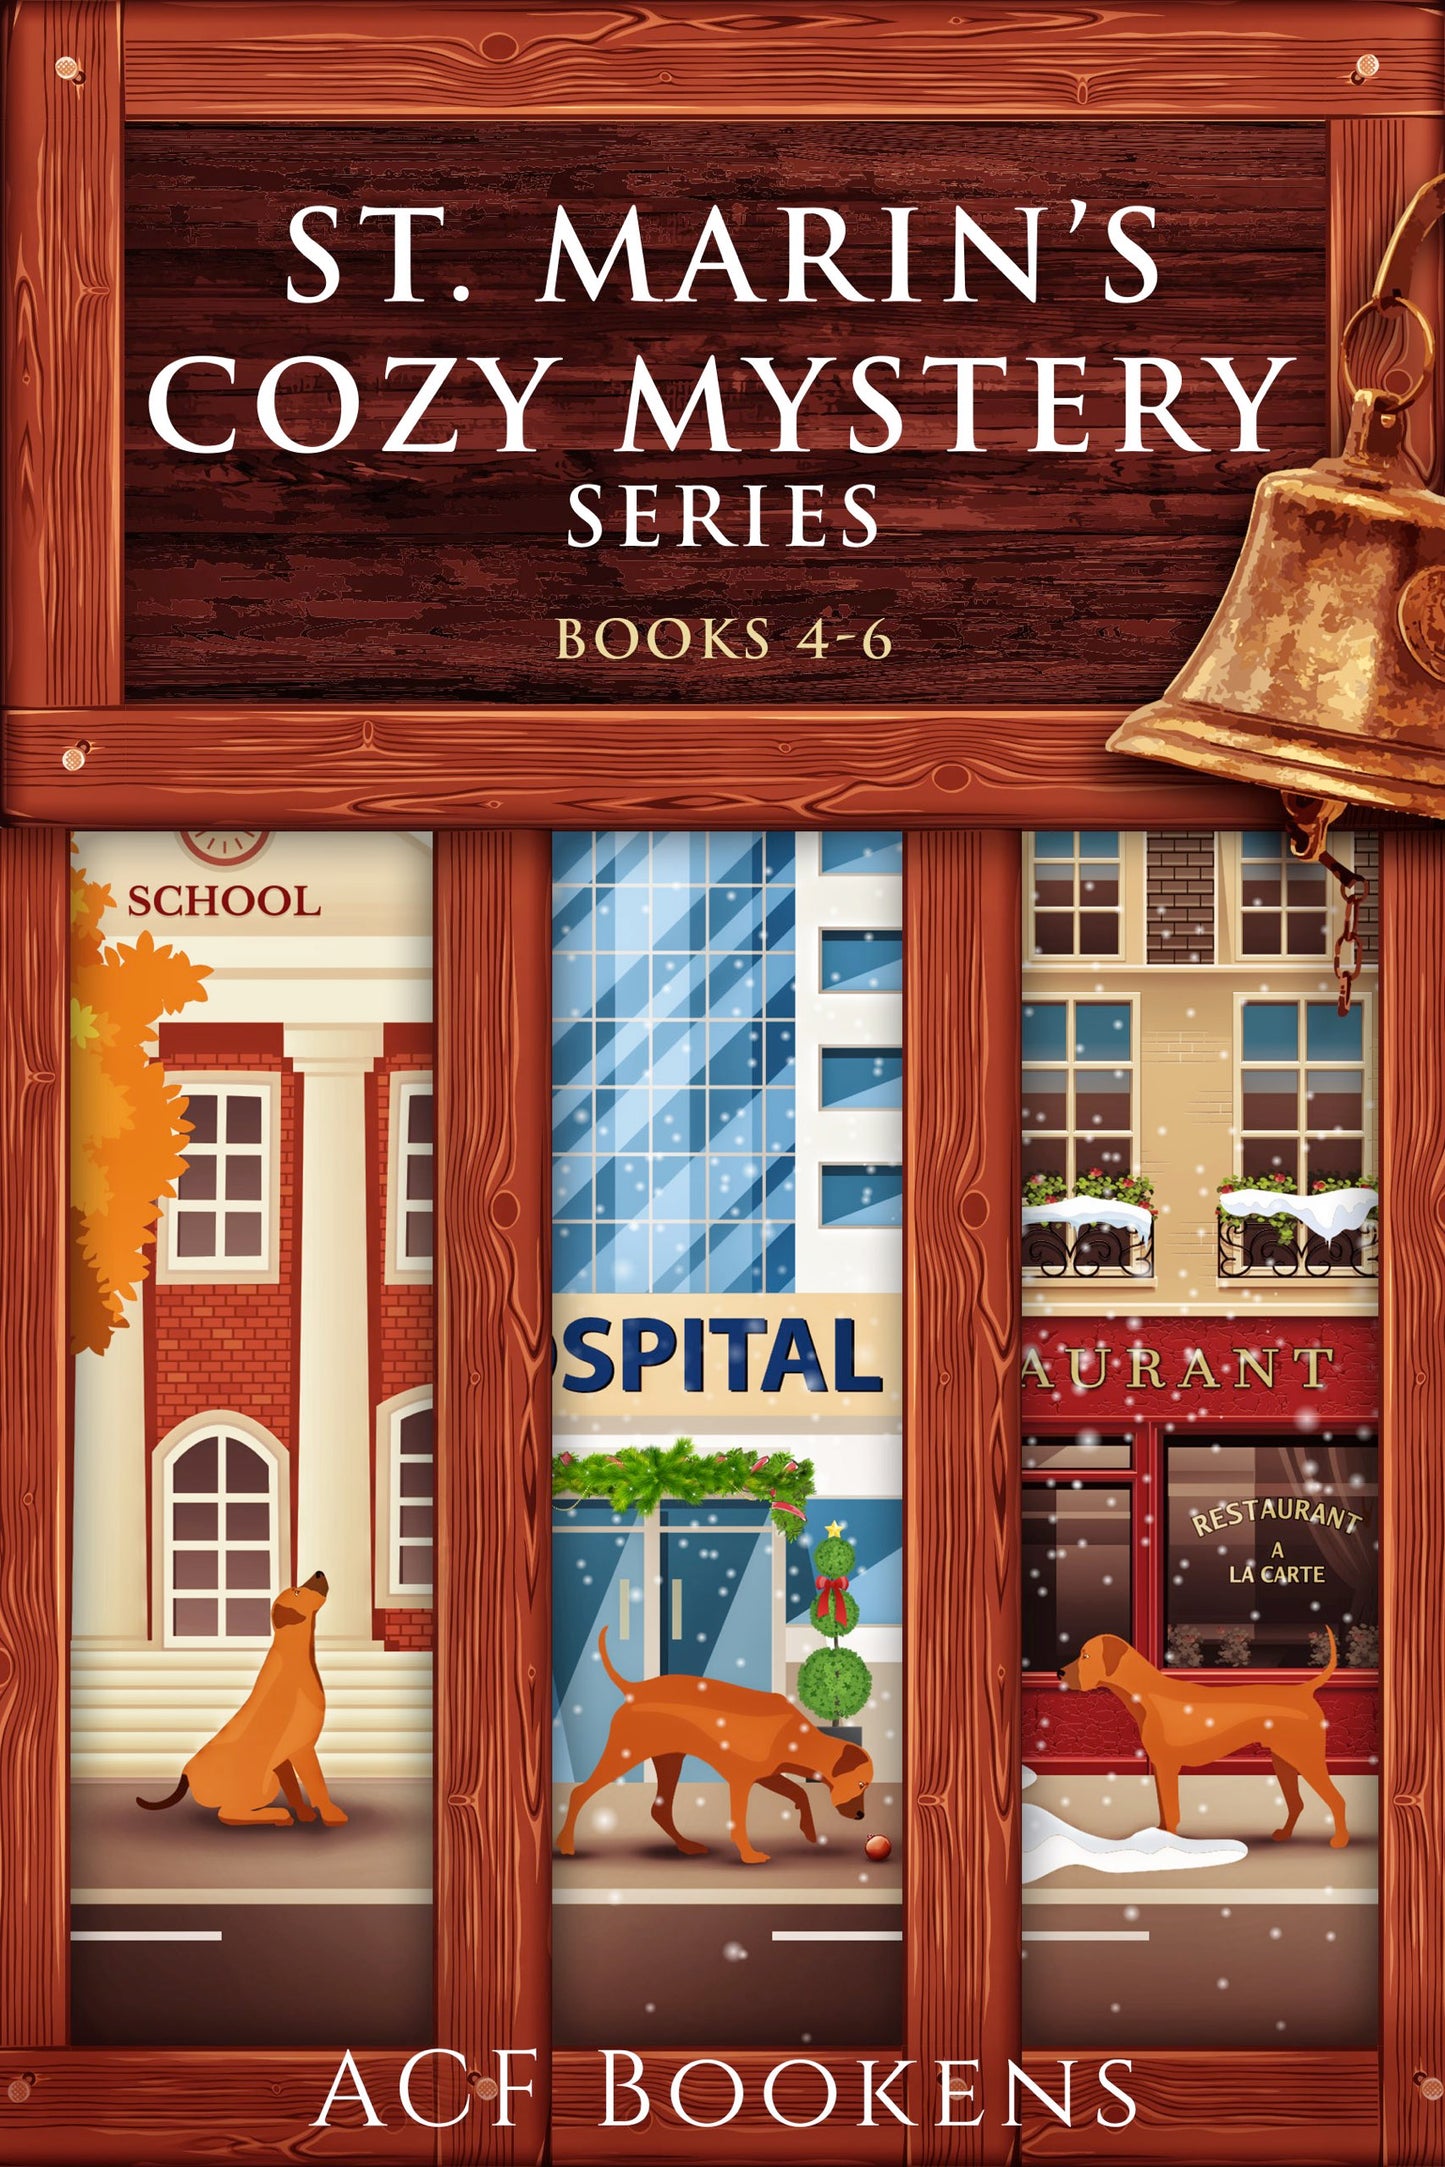 St. Marin's Cozy Mystery Series Box Set, Volume 2 (Books 4-6)